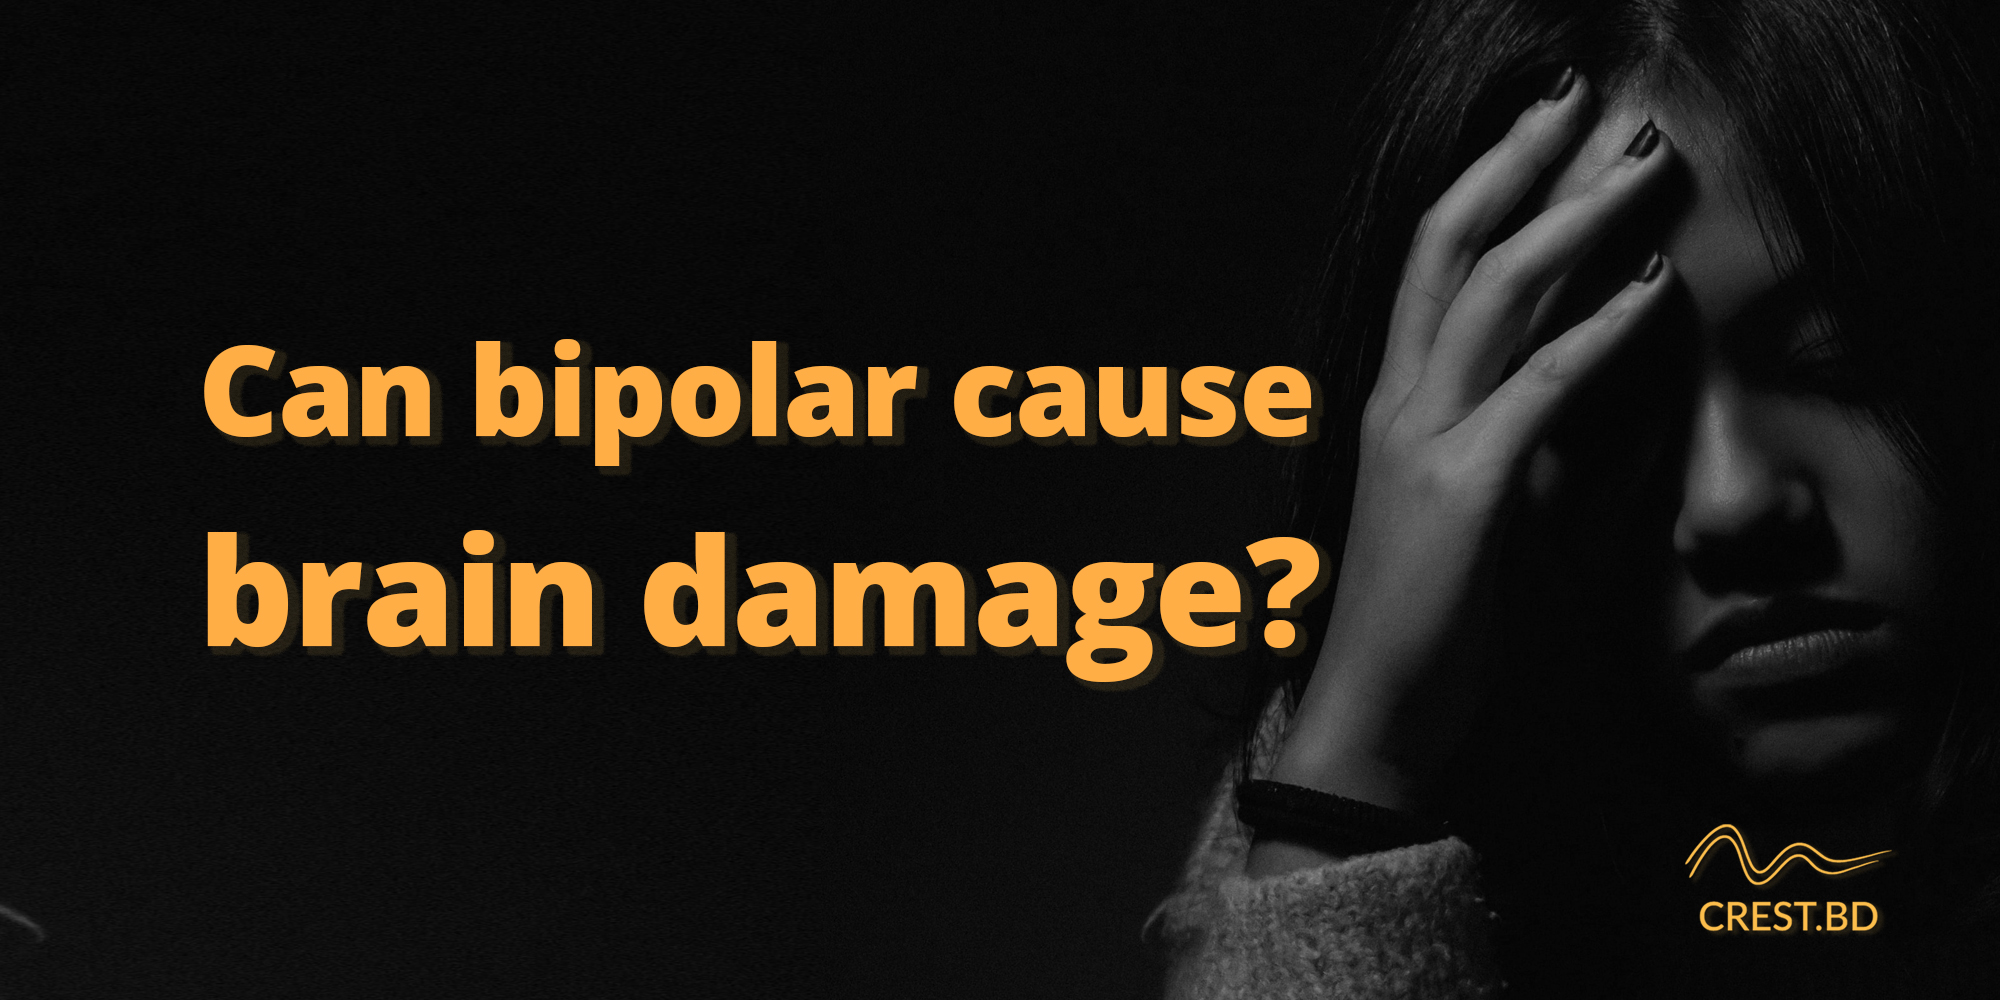 Does bipolar disorder damage your brain?